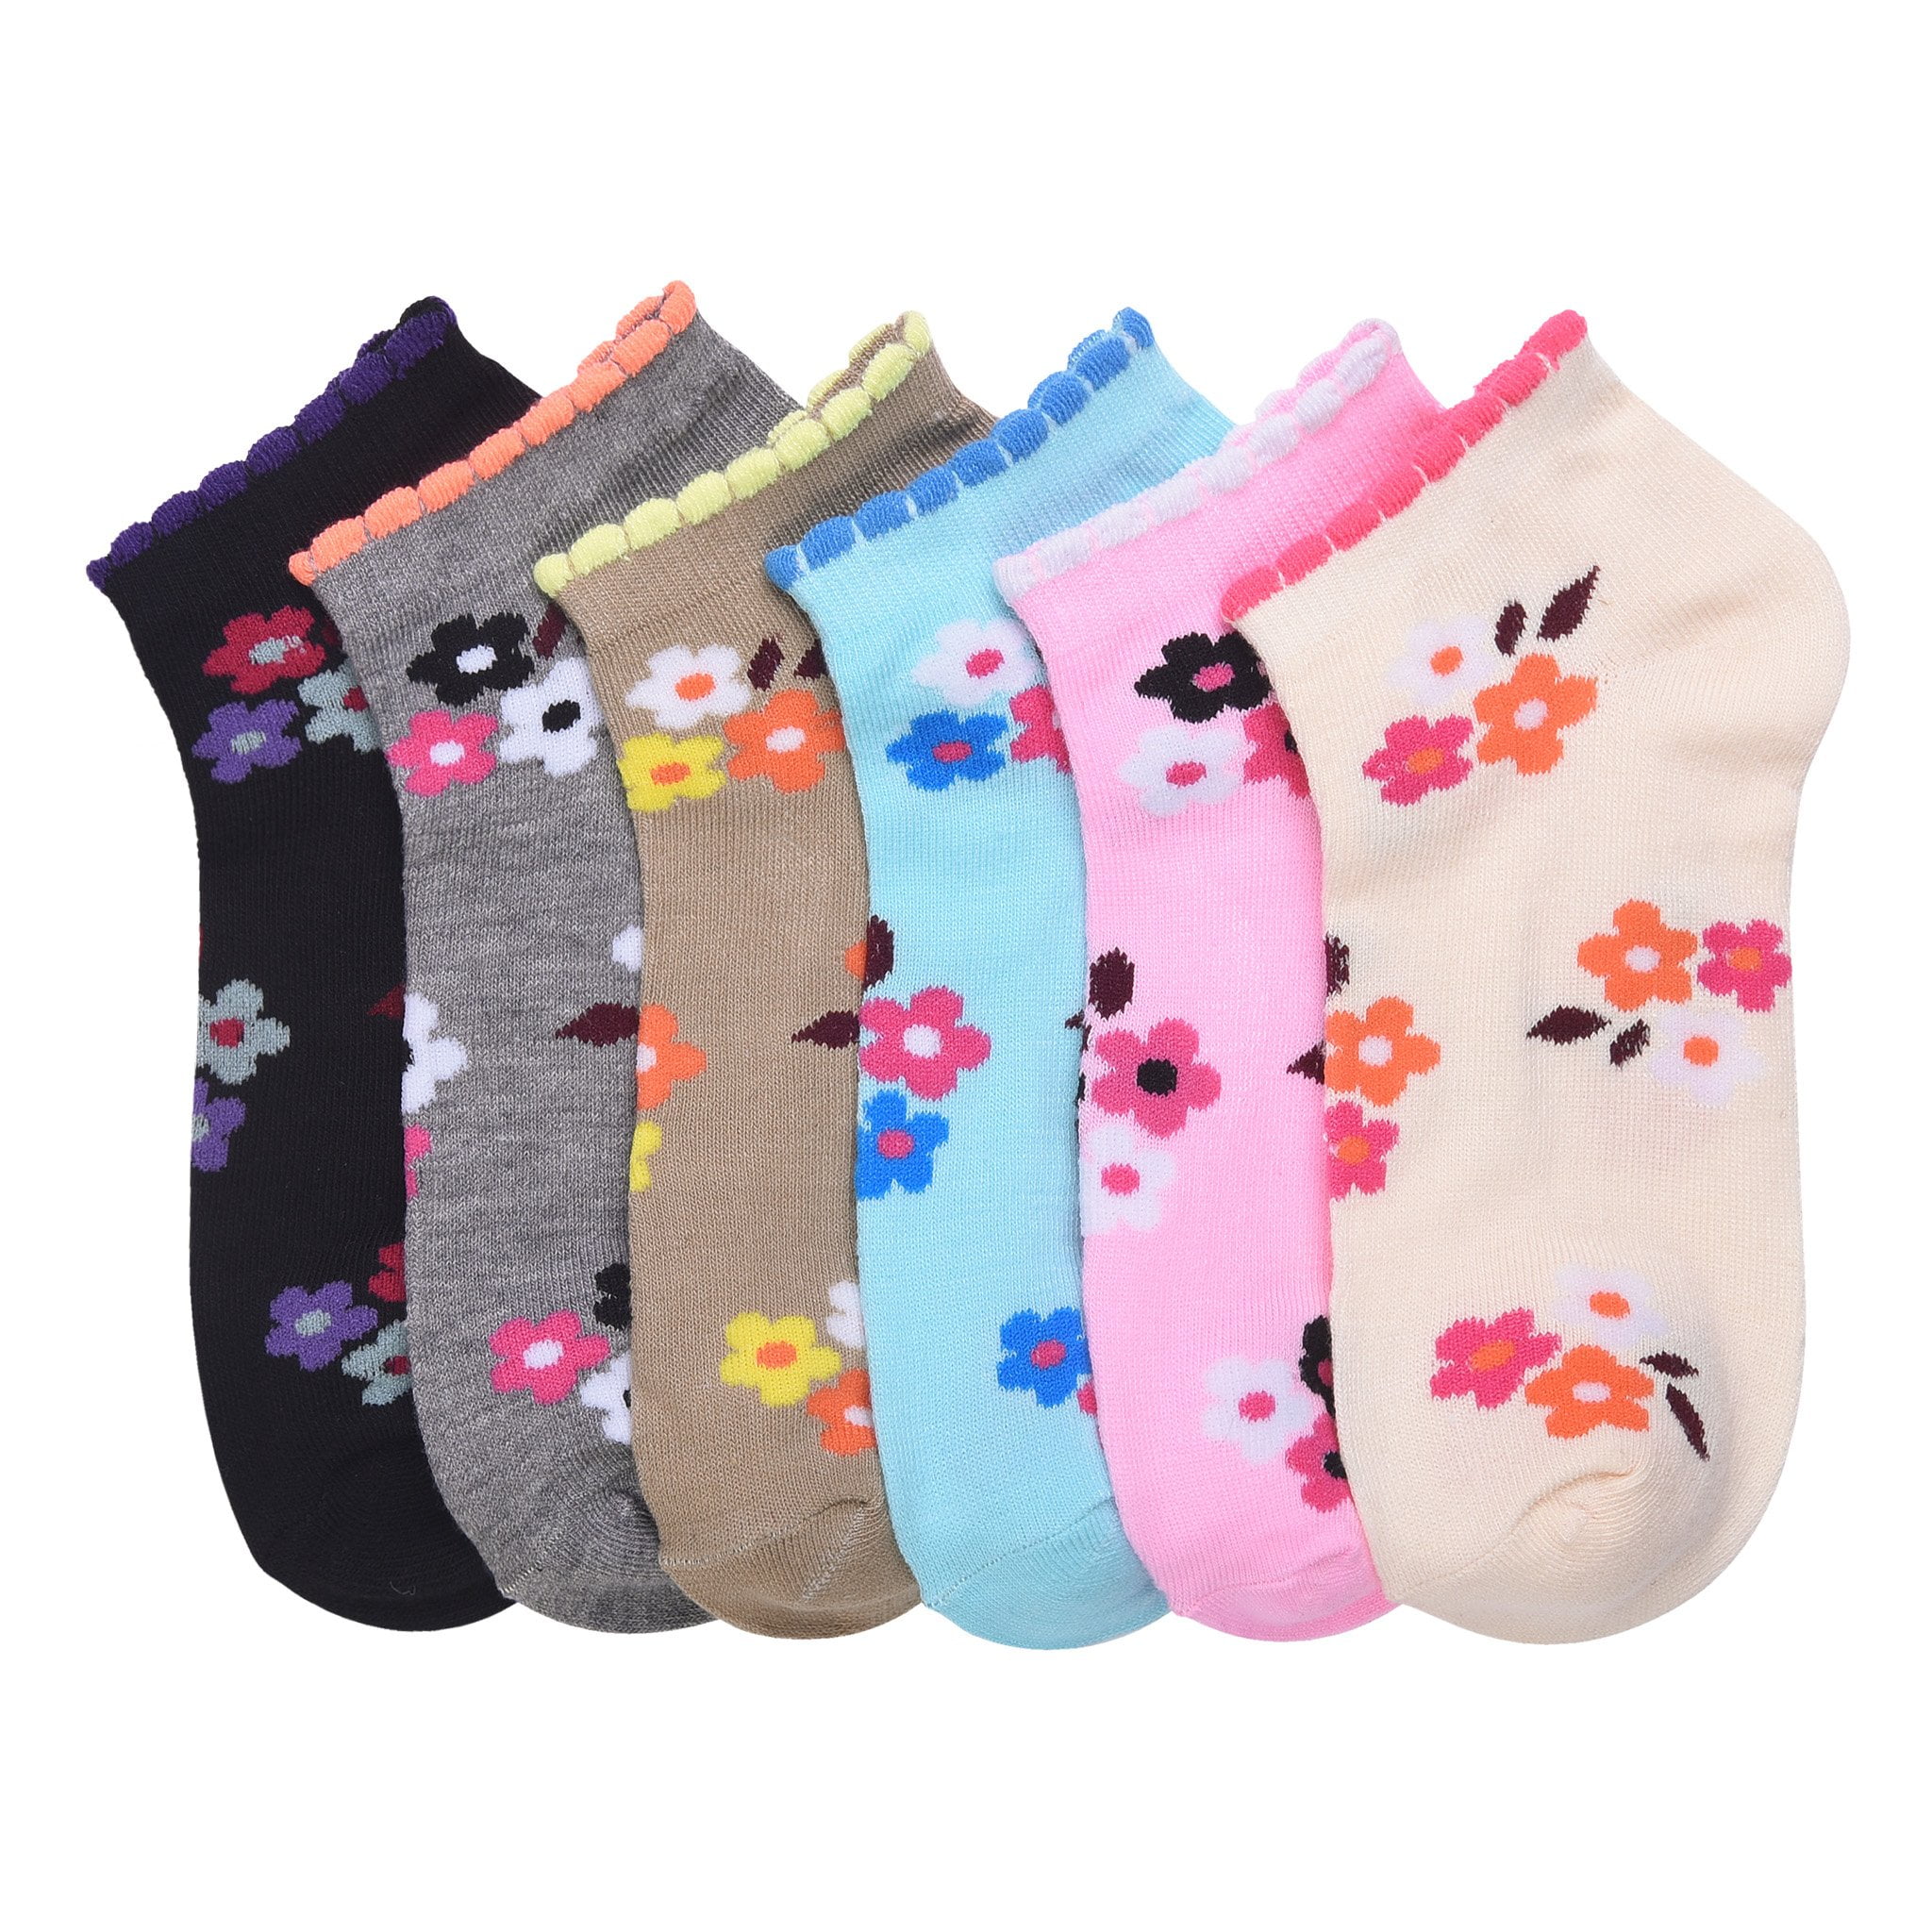 6 Pairs MAMIA POLKA Dot Crew Fashion Design Socks Size 9-11 Multi Color Girl SOX 